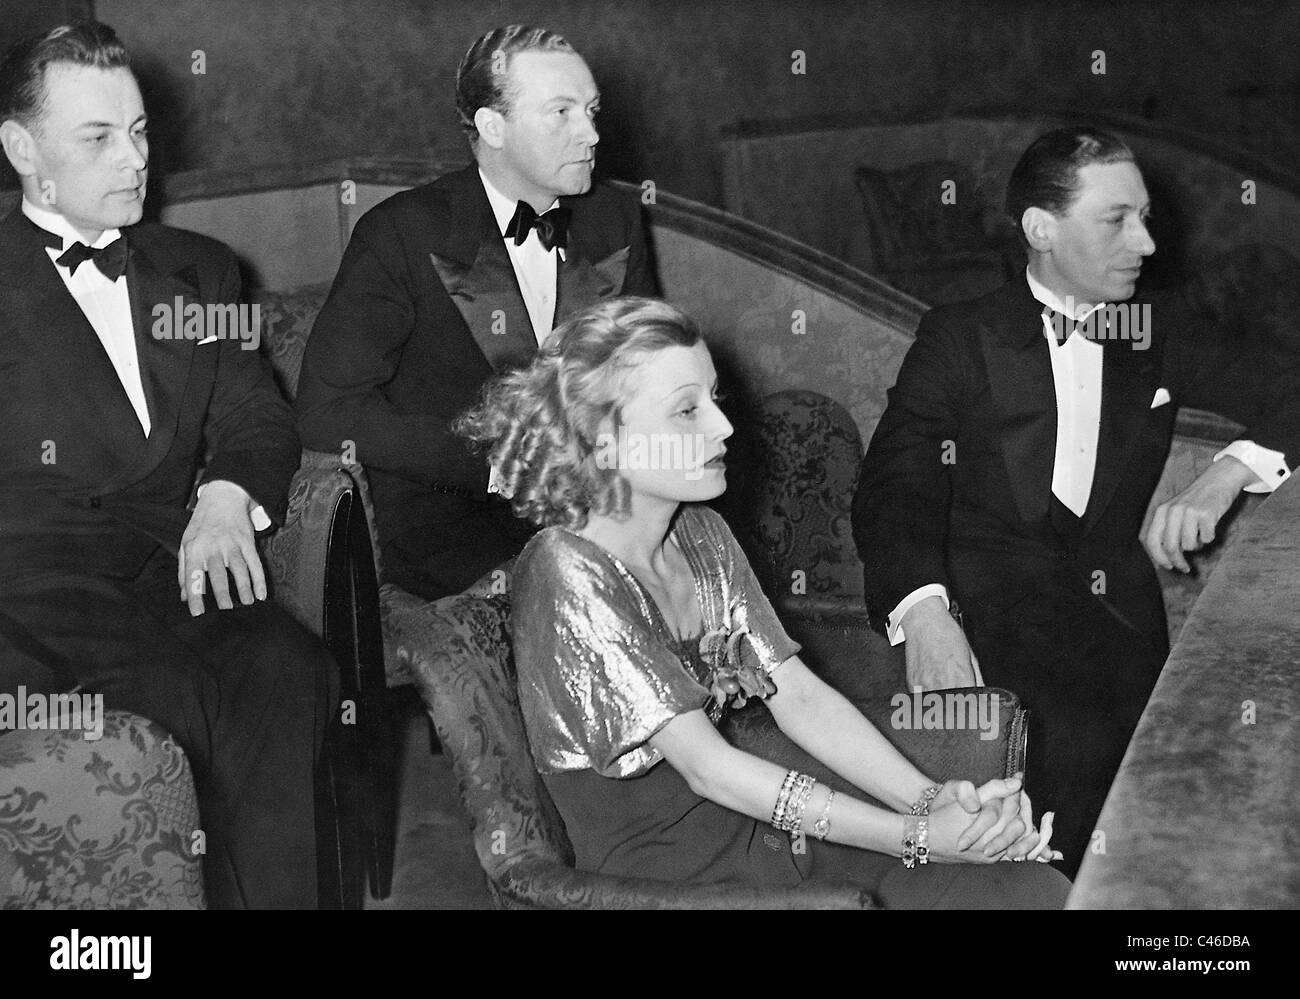 Paul Martin, Willy Fritsch, Lilian Harvey and Willi Birgel, 1935 Stock Photo